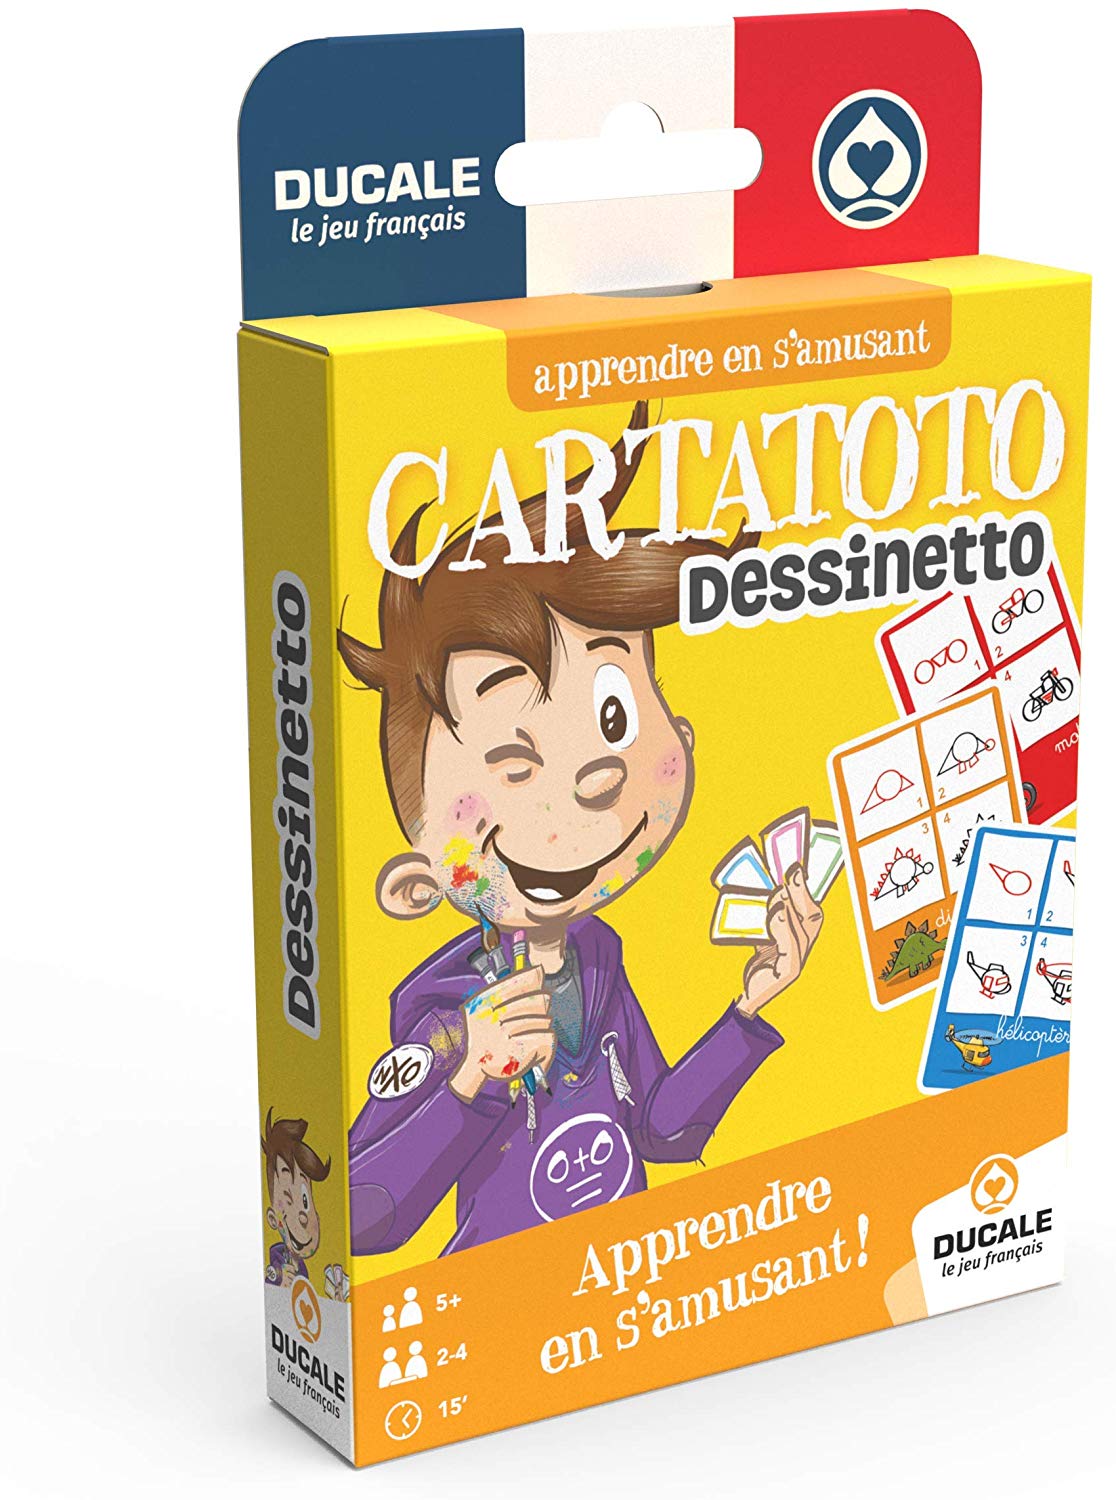 Cartatoto Additions - Apprendre en S'Amusant